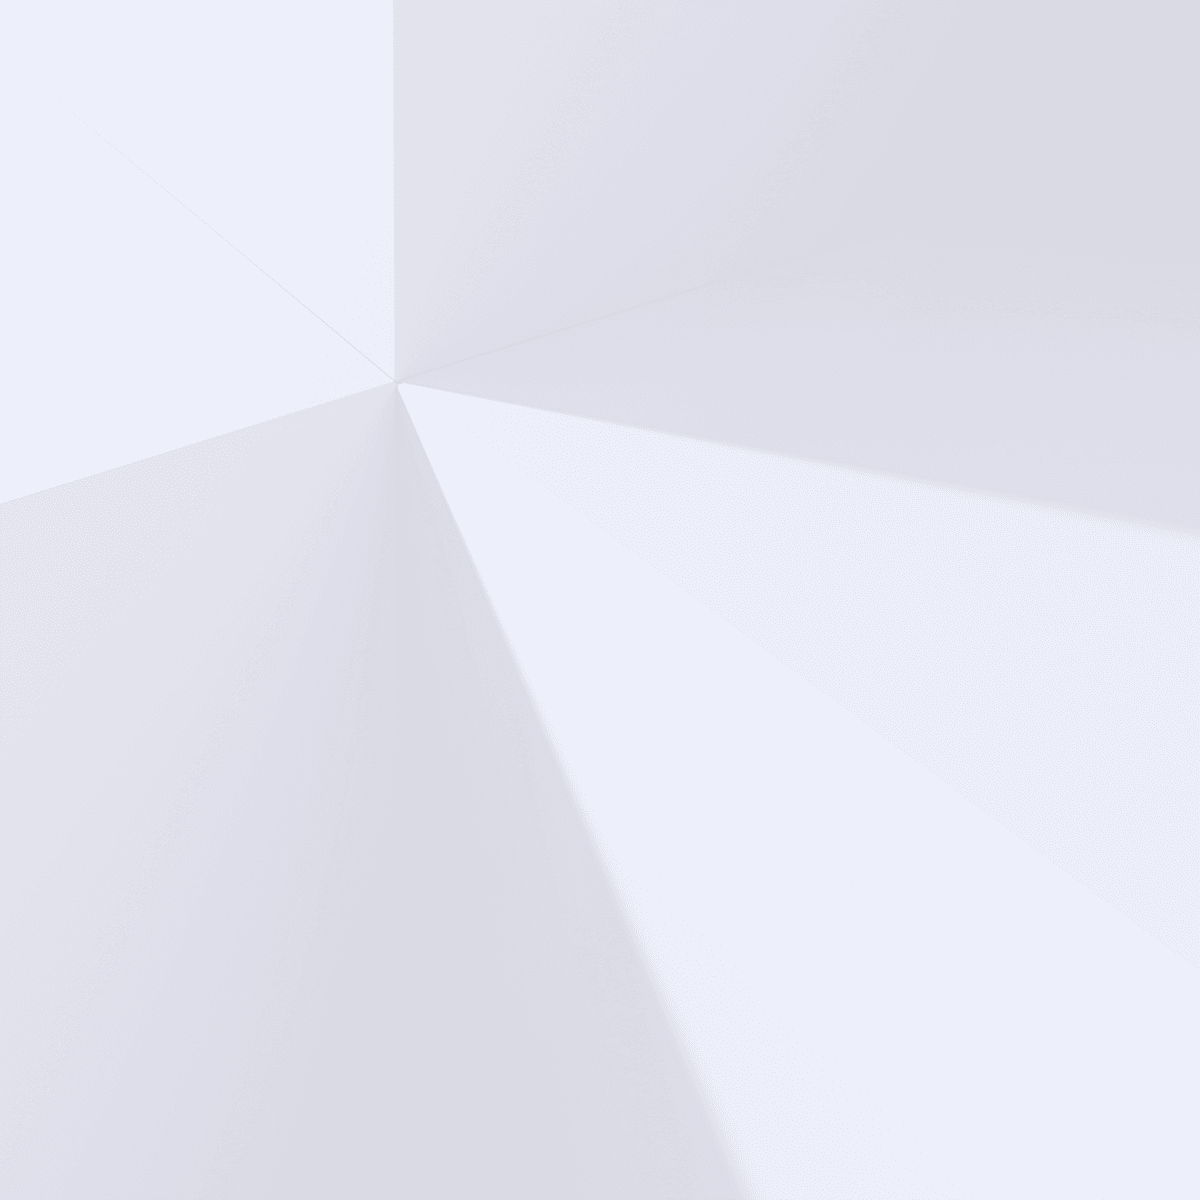 Abstract White Corner